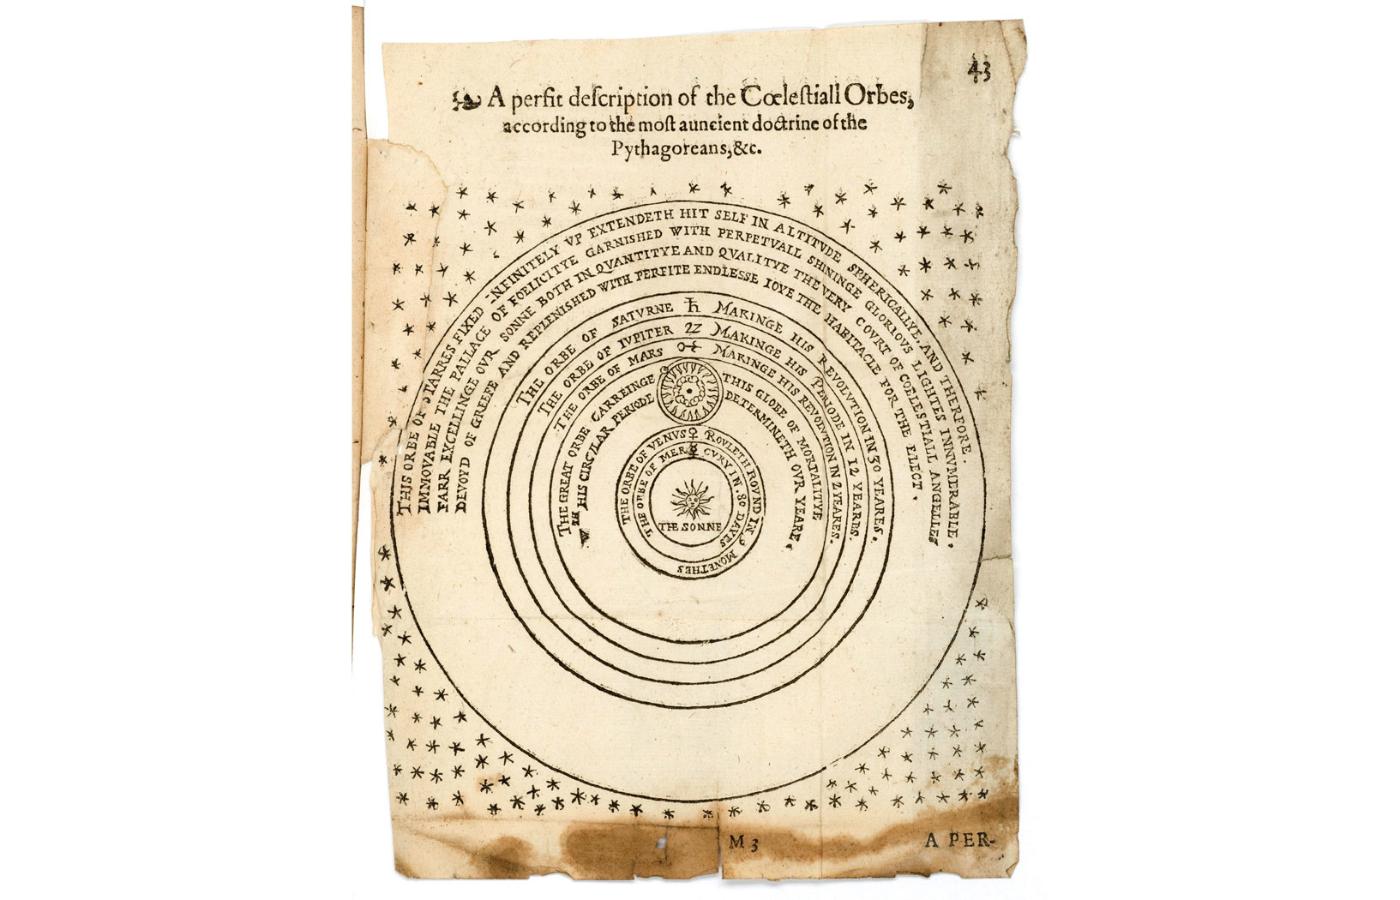 Schemat Wszechświata z „Prognostication everlasting” Thomasa Diggesa; drzeworyt z 1605 r.